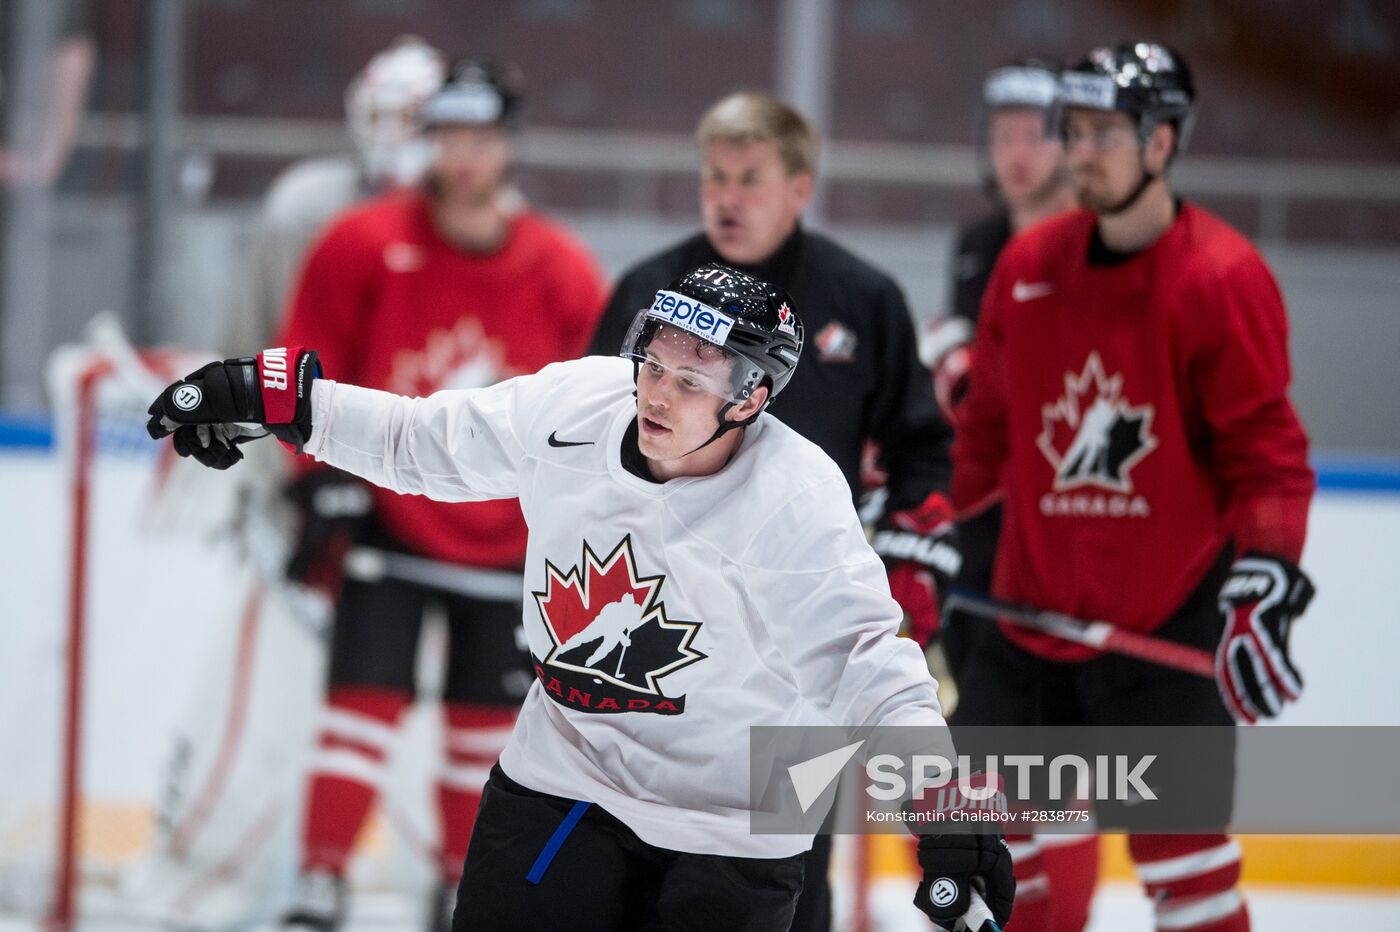 National teams train for 2016 IIHF World Championship